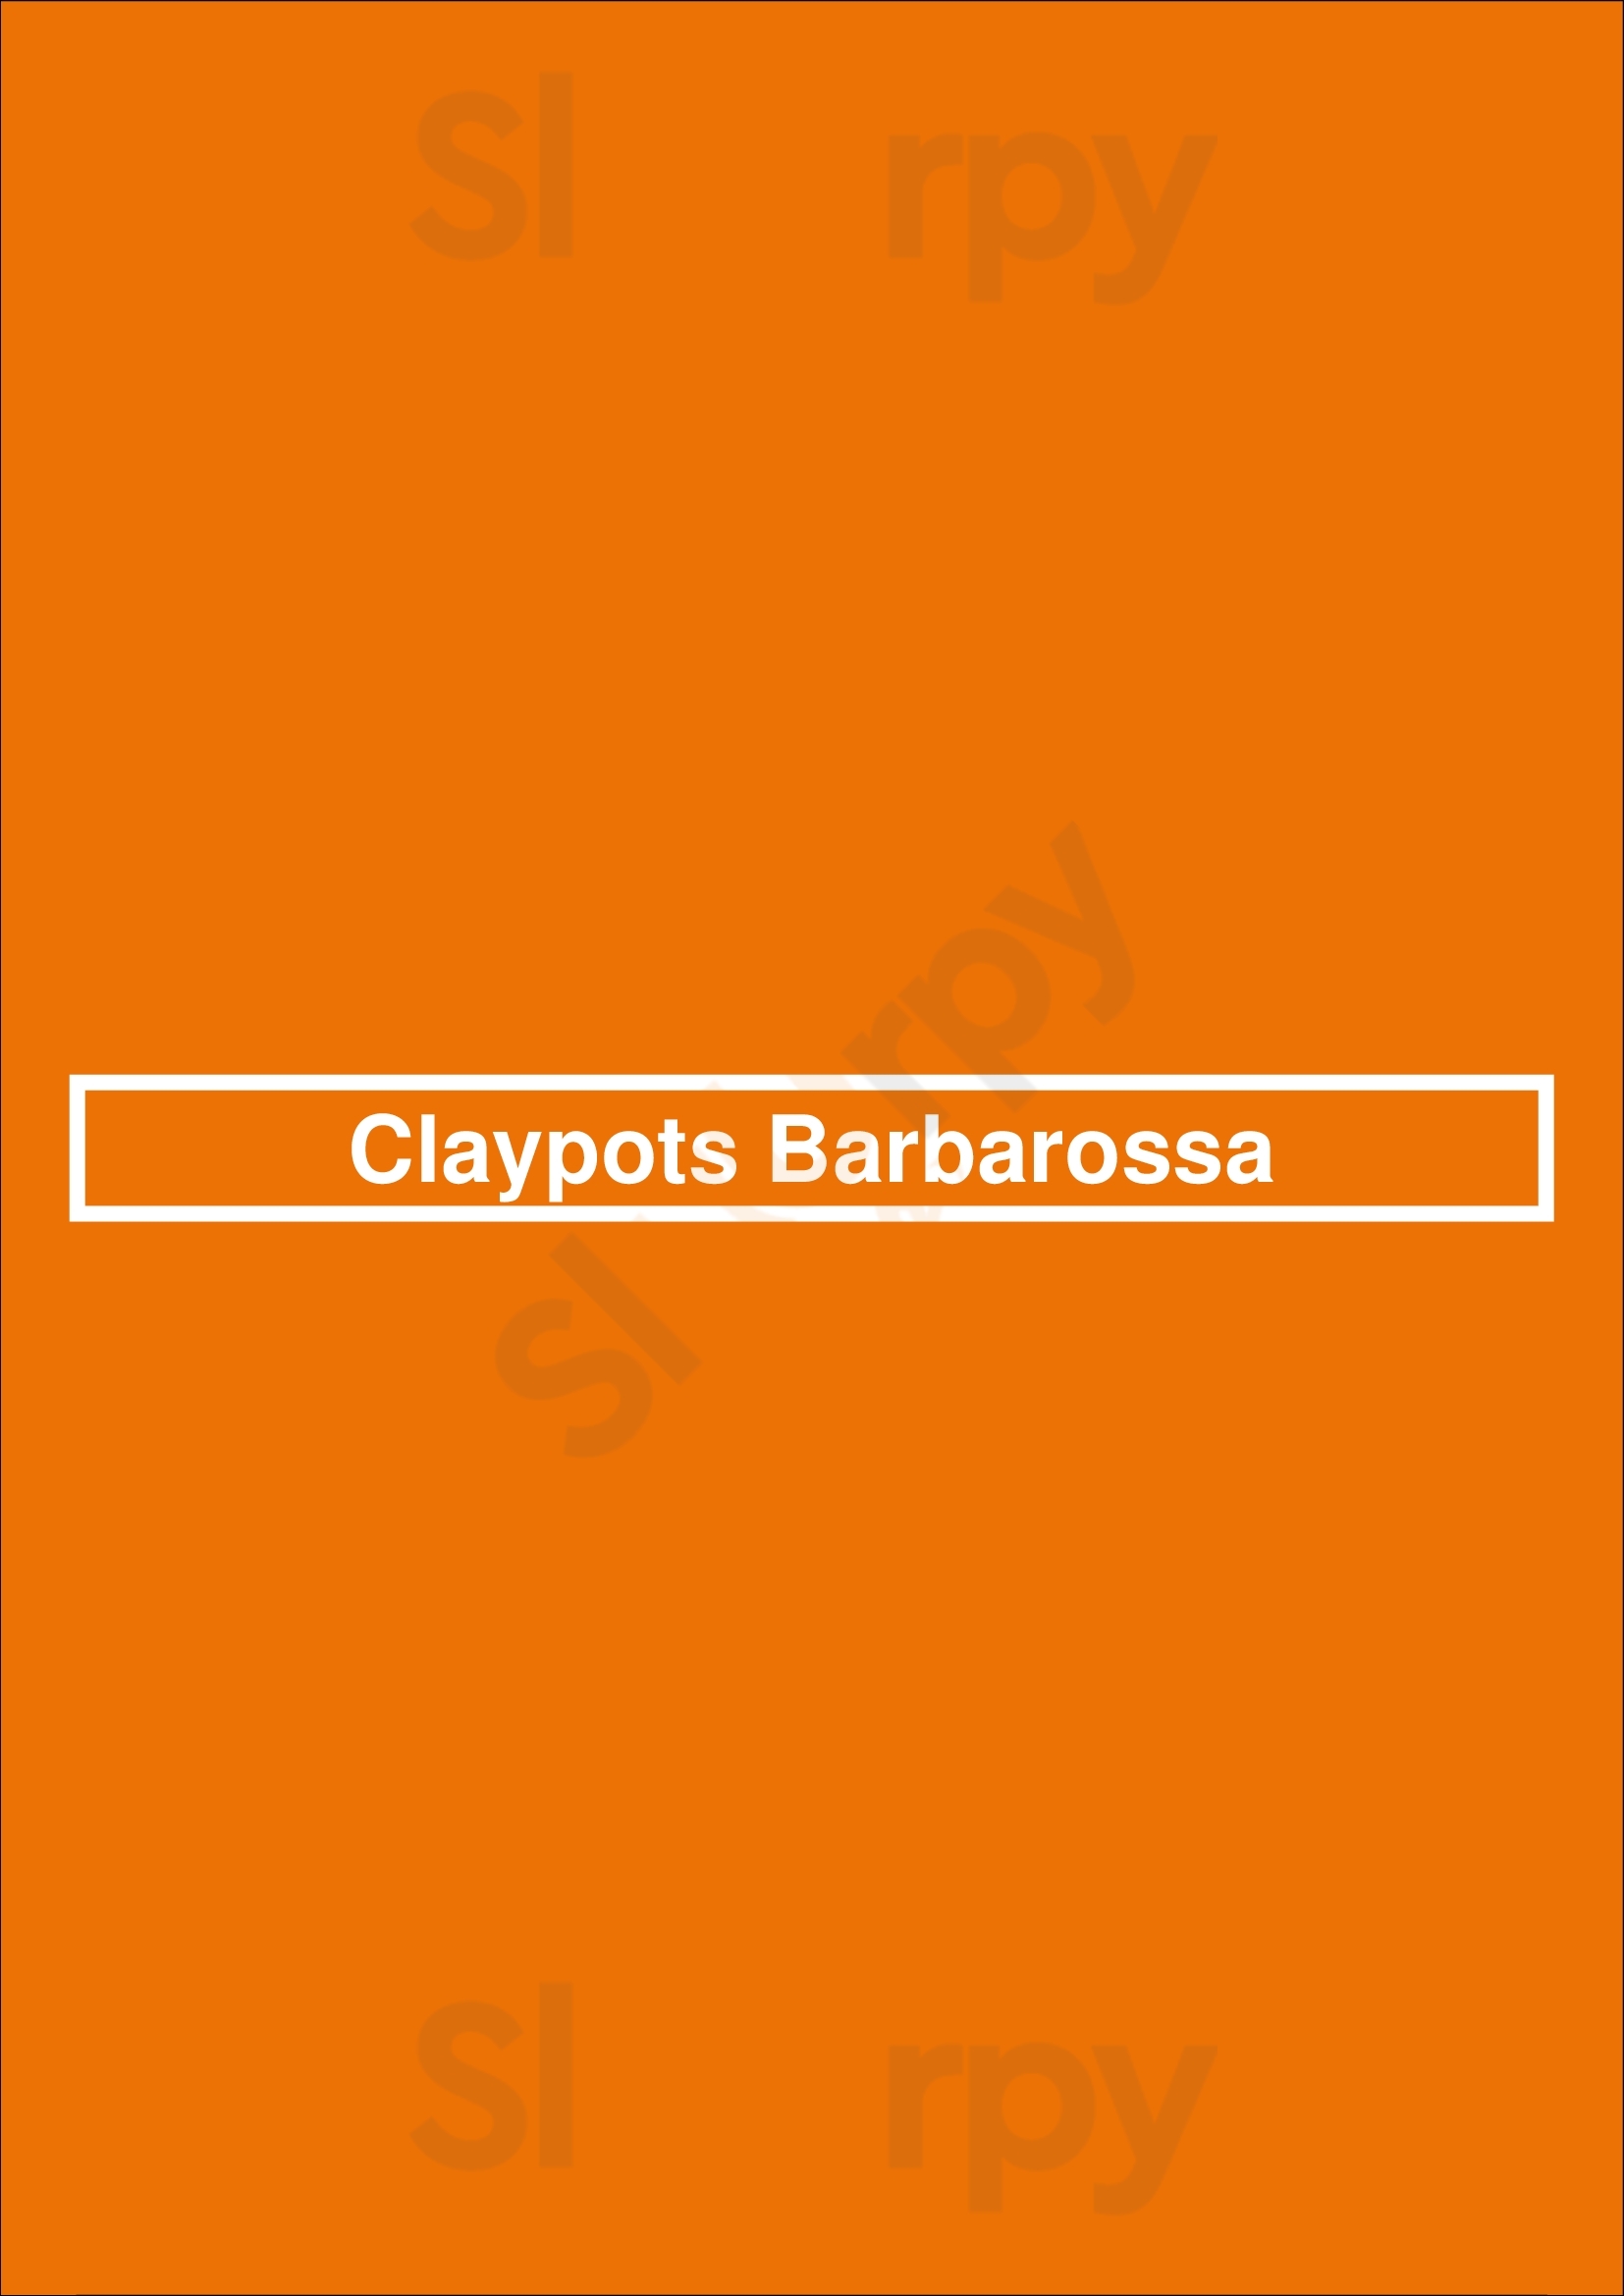 Claypots Barbarossa Melbourne Menu - 1